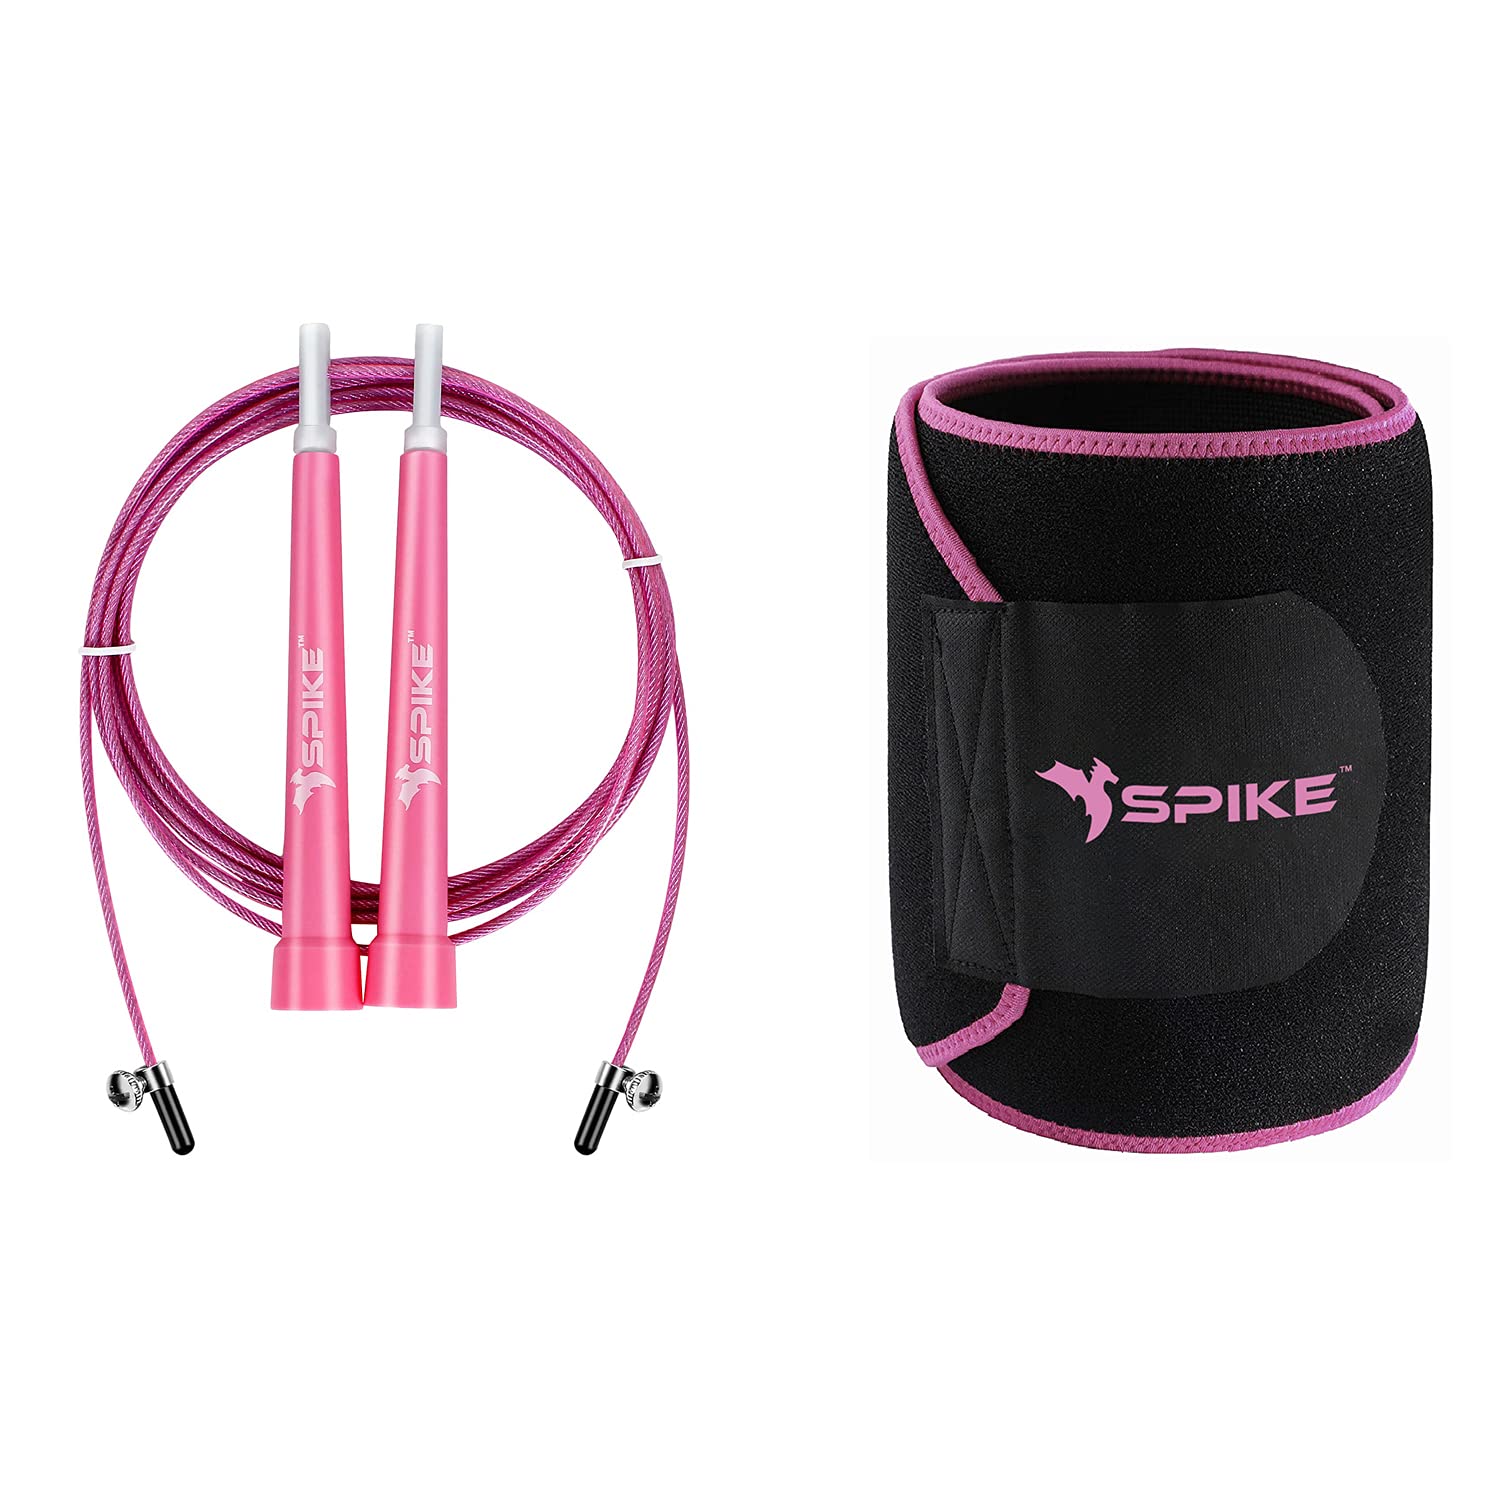 Spike Skipping Rope (Pink) + Spike Slim Belt (Pink)